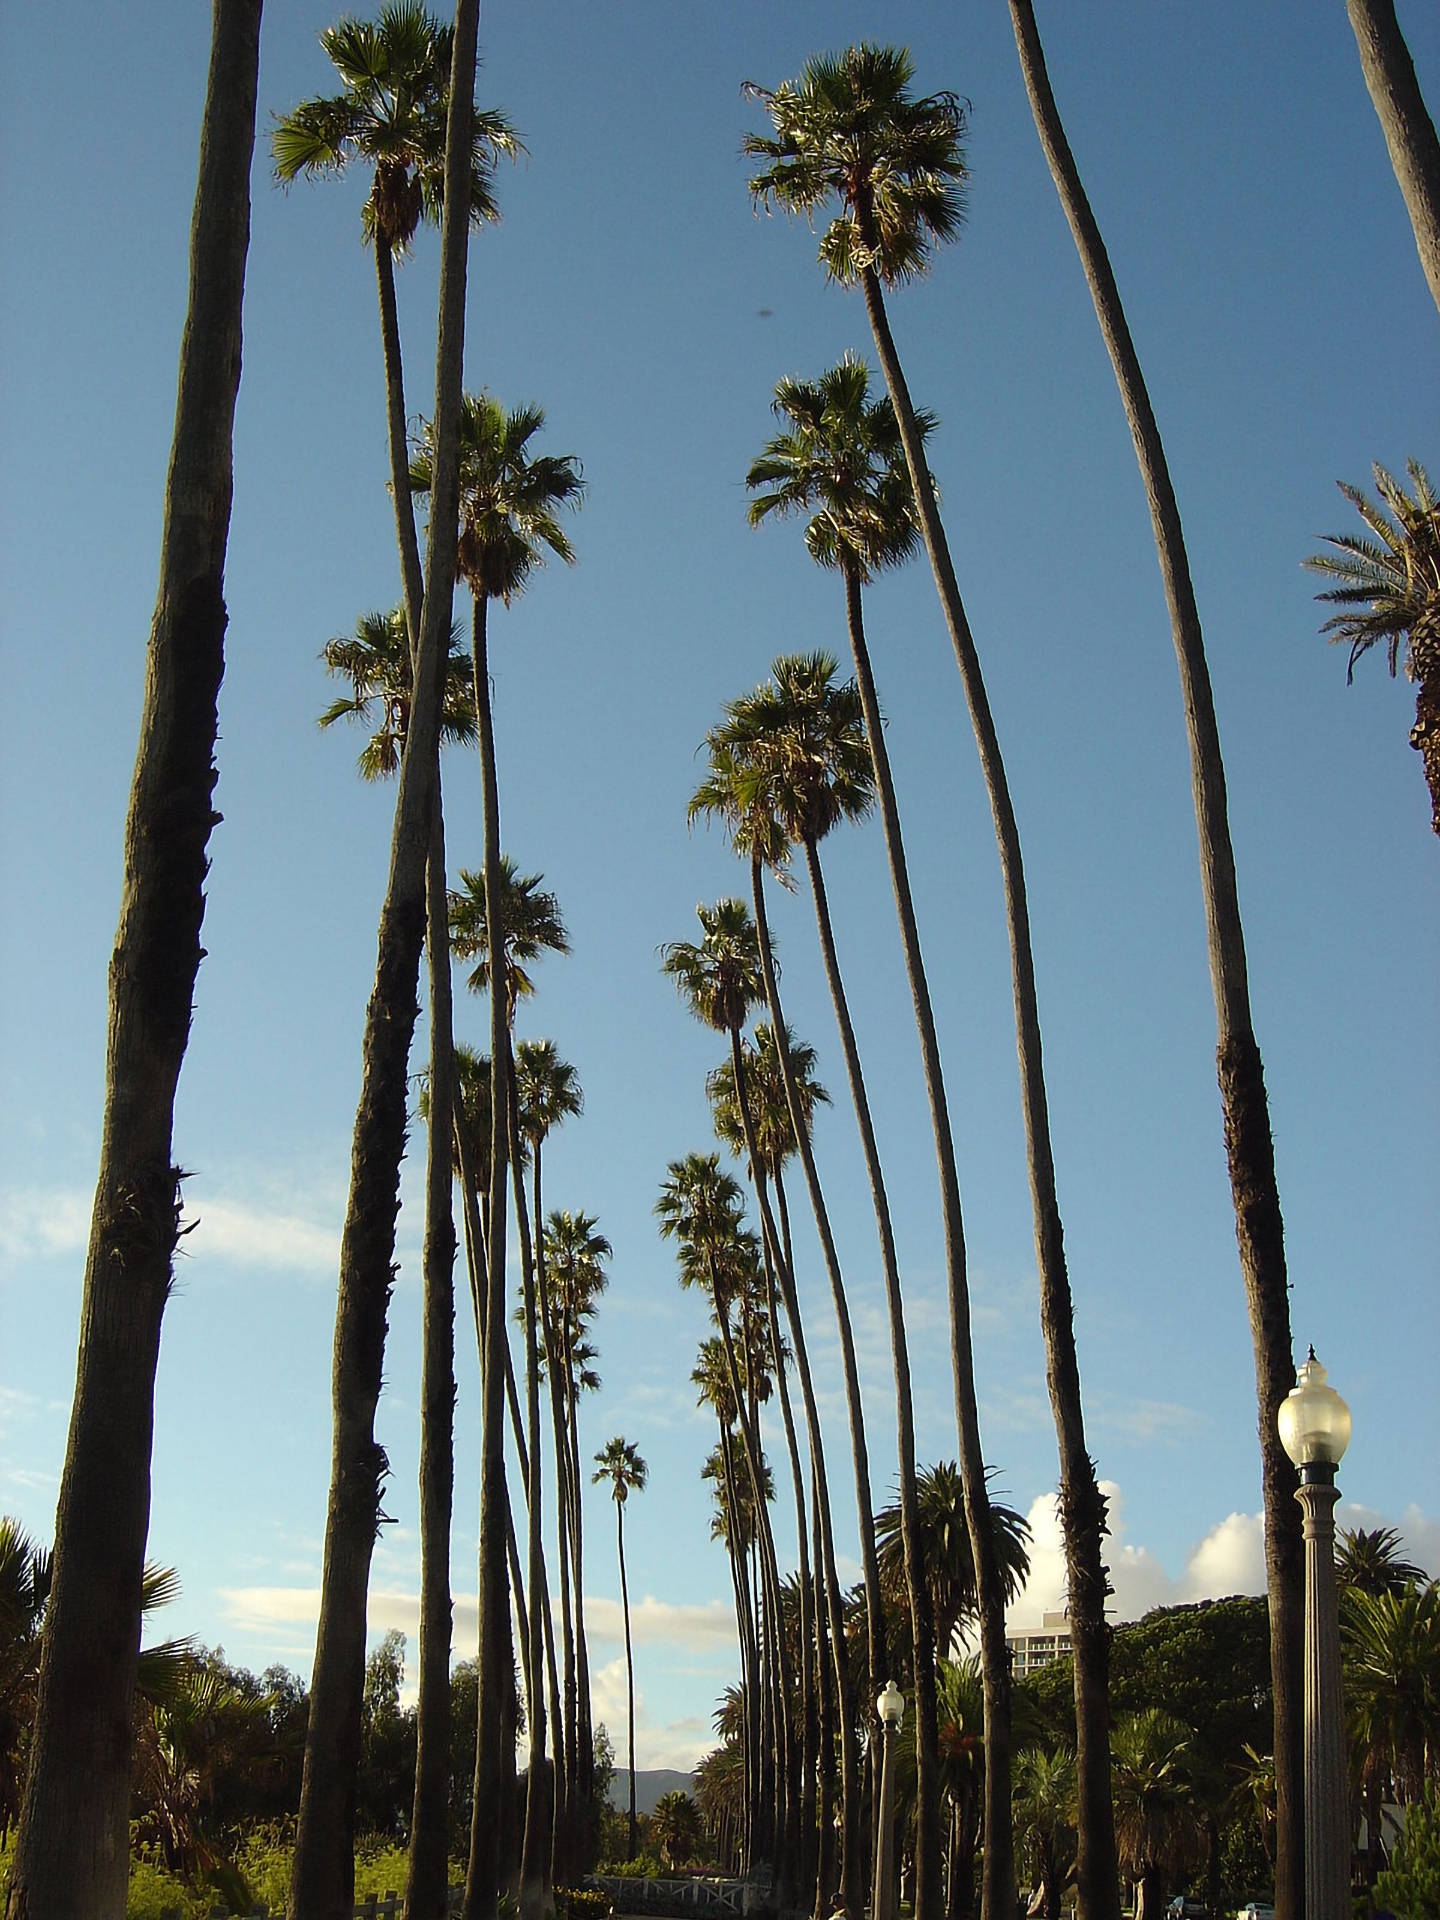 Caption: Basking in the Sunlight: Santa Monica's Signature Palm Trees Wallpaper